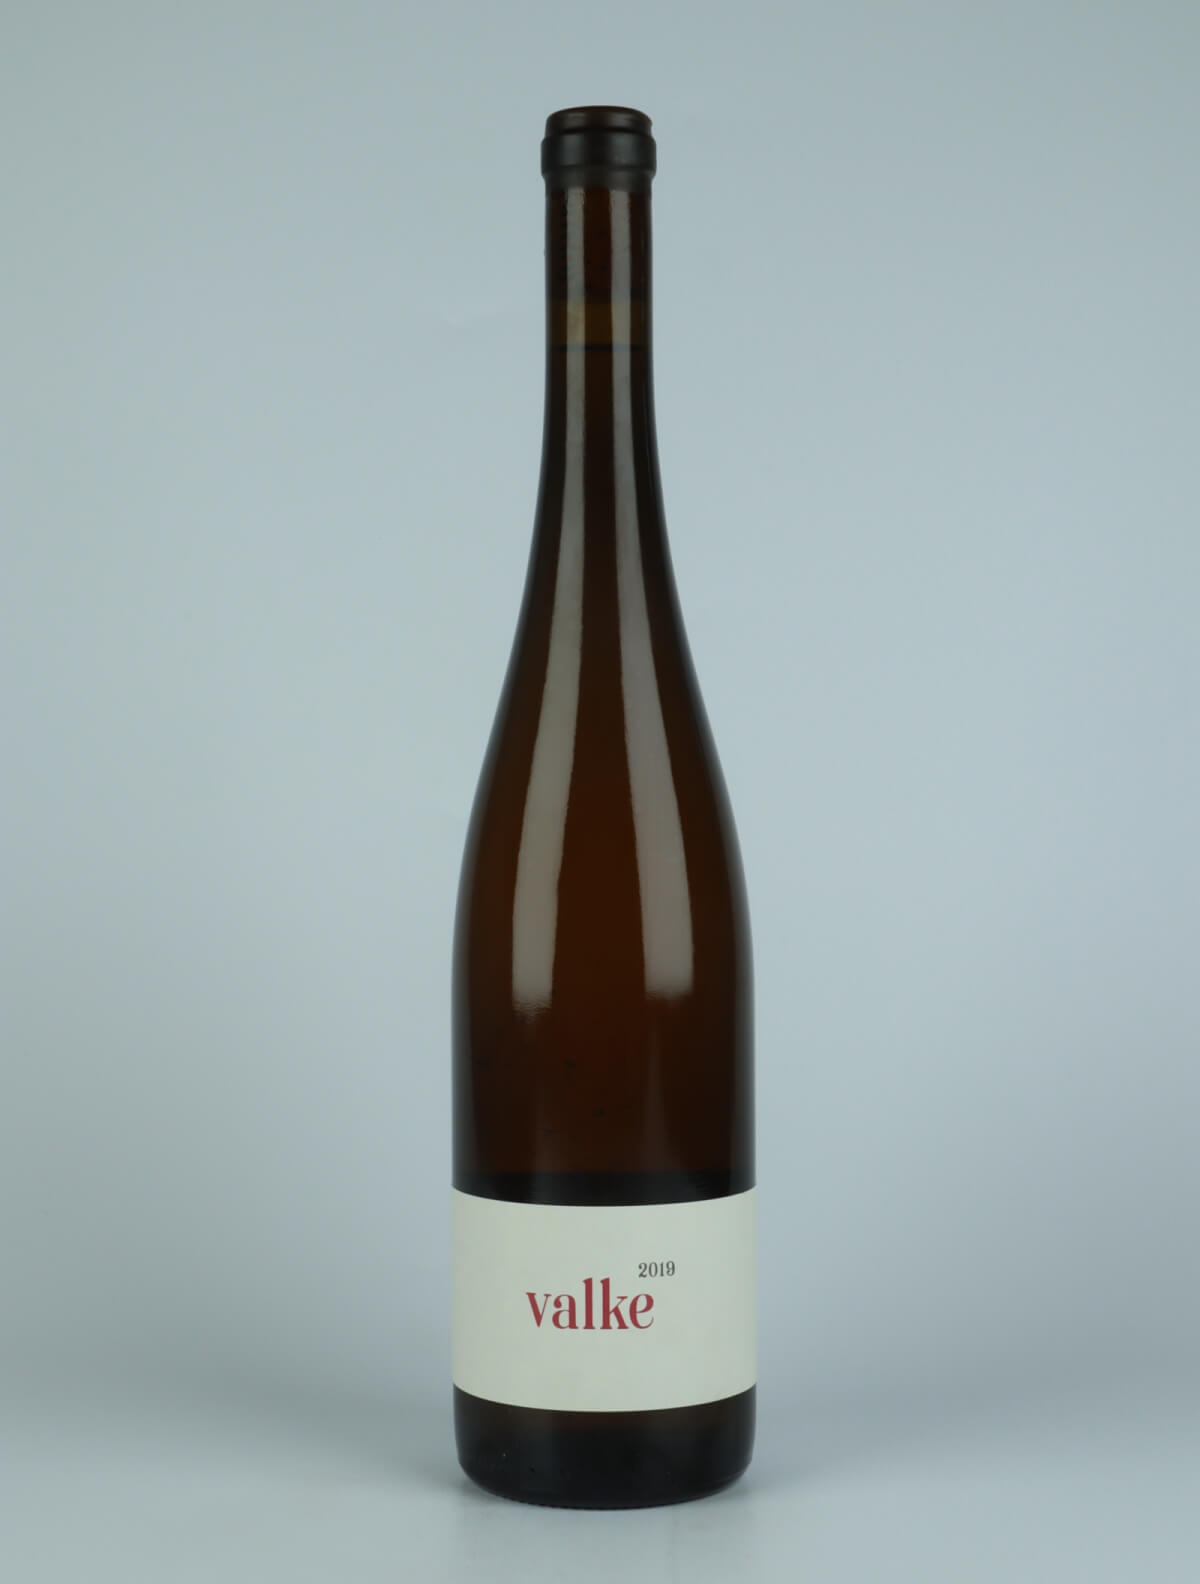 A bottle 2019 Valke White wine from Jakob Tennstedt, Mosel in Germany